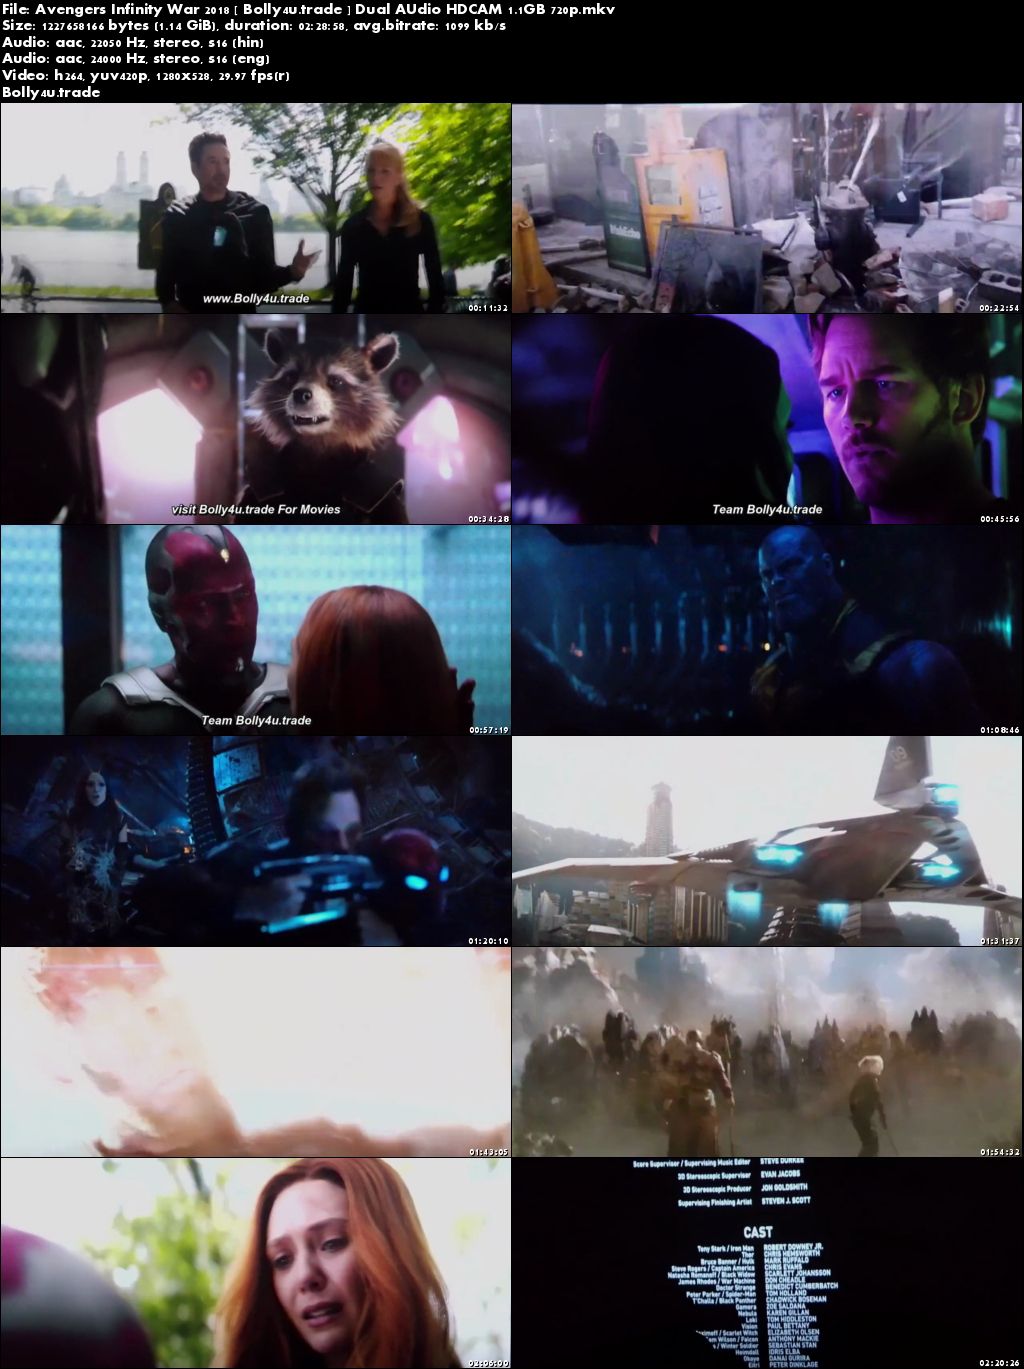 Avengers Infinity War 2018 New HDCAM Hindi Dual Audio Full Movie 720p Download